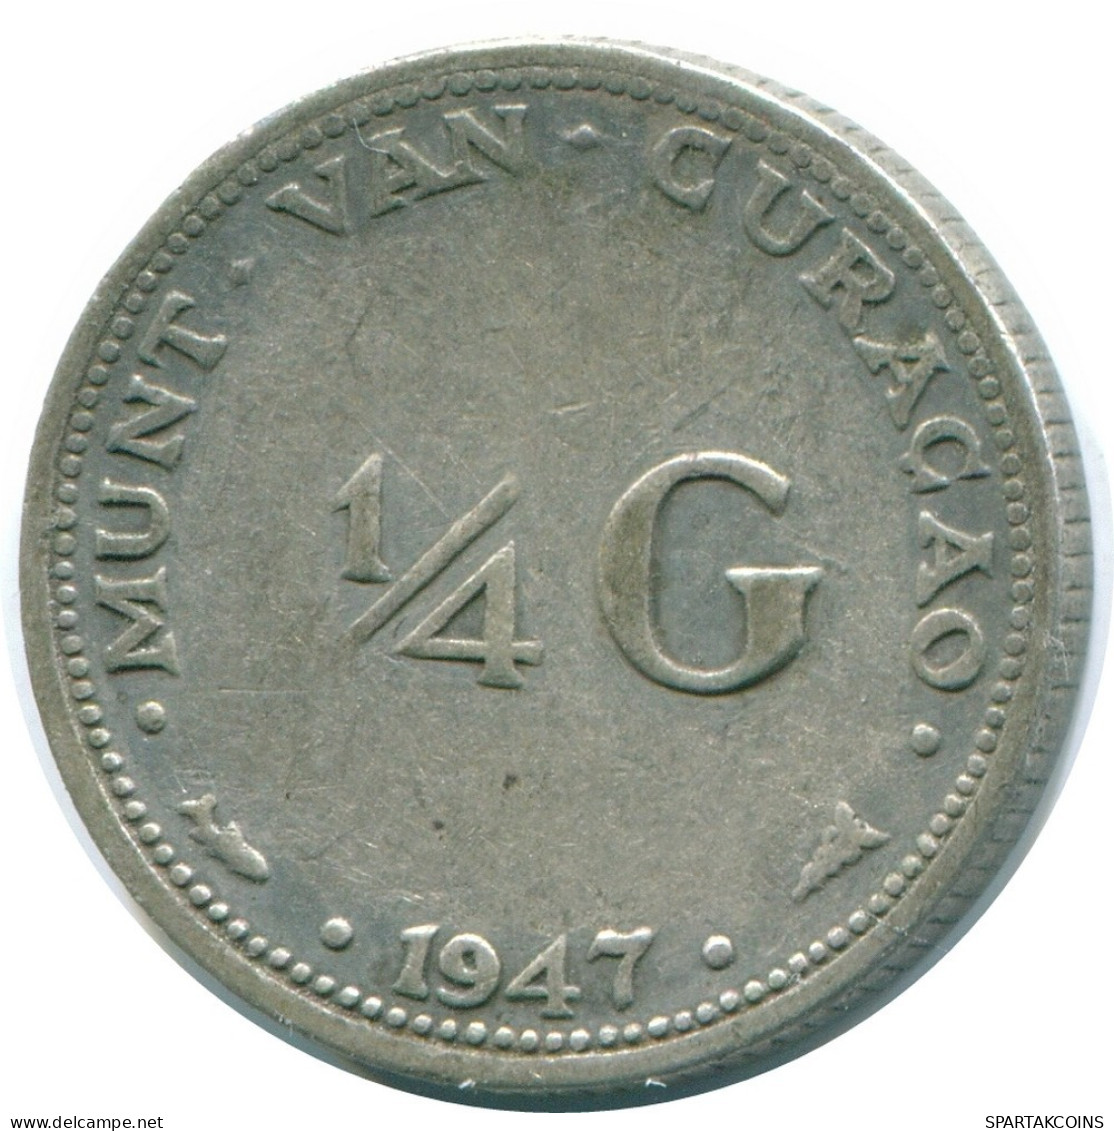 1/4 GULDEN 1947 CURACAO NIEDERLANDE SILBER Koloniale Münze #NL10745.4.D.A - Curaçao